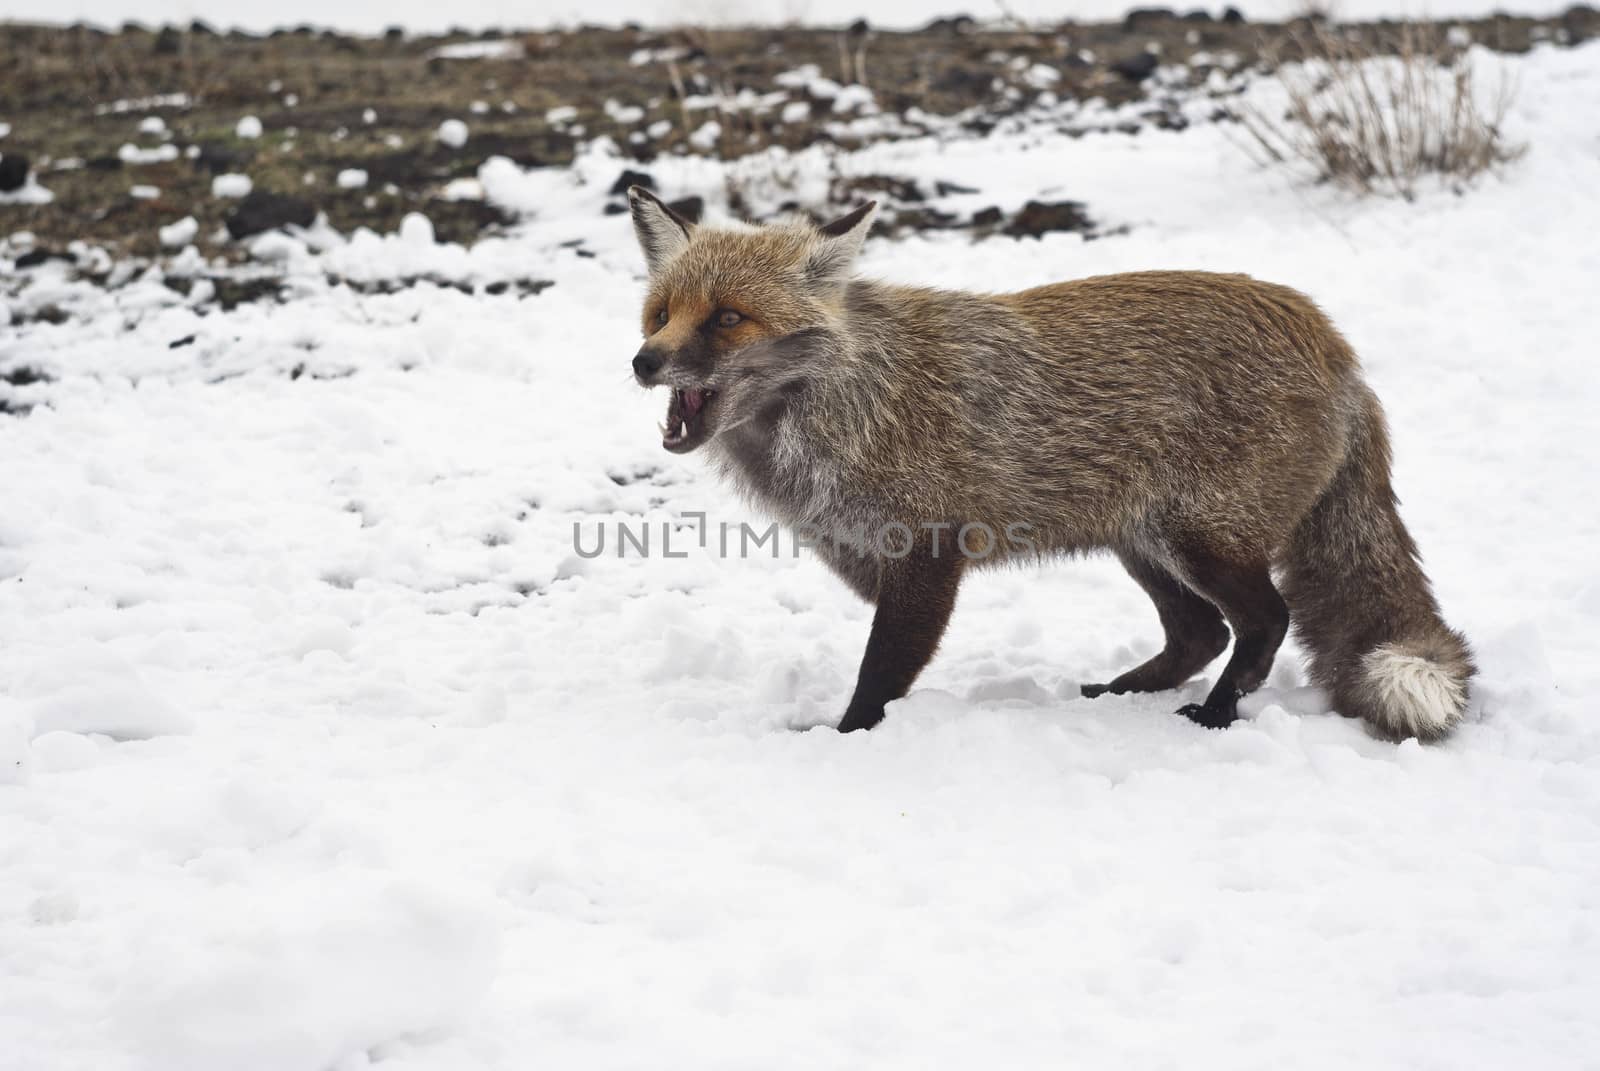 portrait of red fox in the snow. etna volcano, sicily